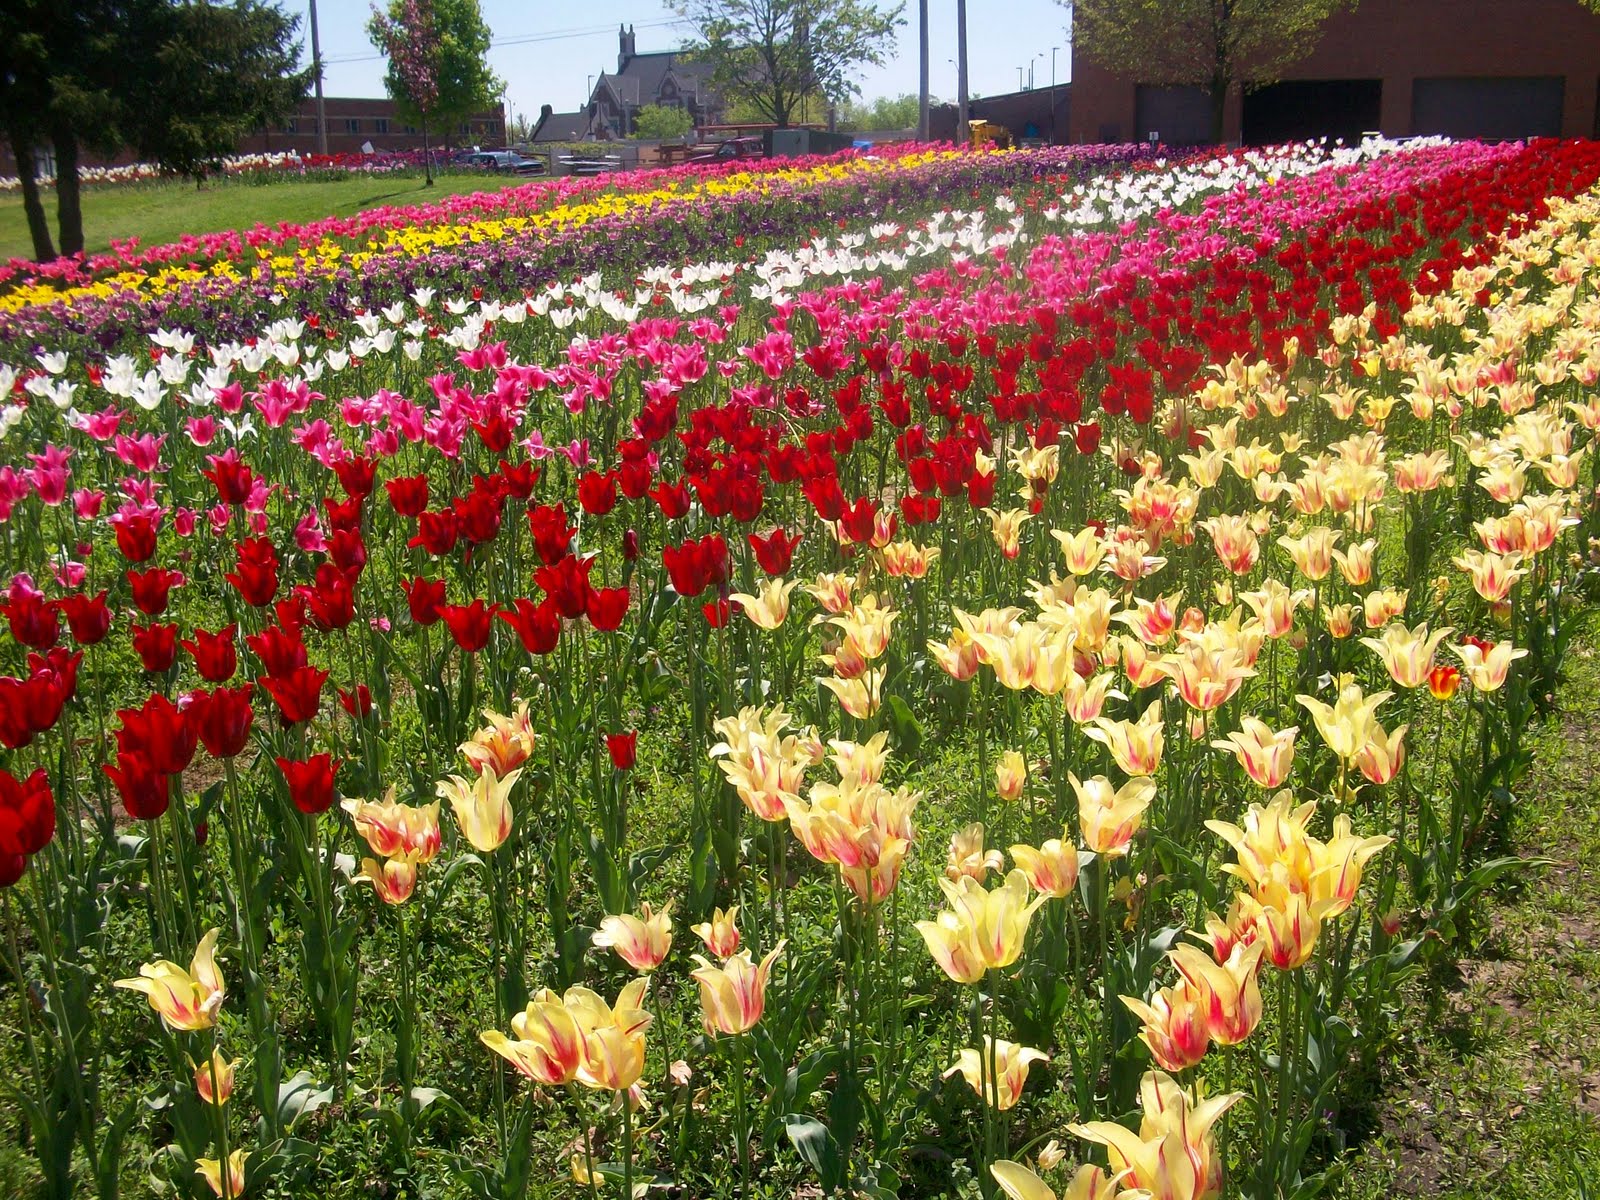 wanderlust Tulip Festival in Holland, MI